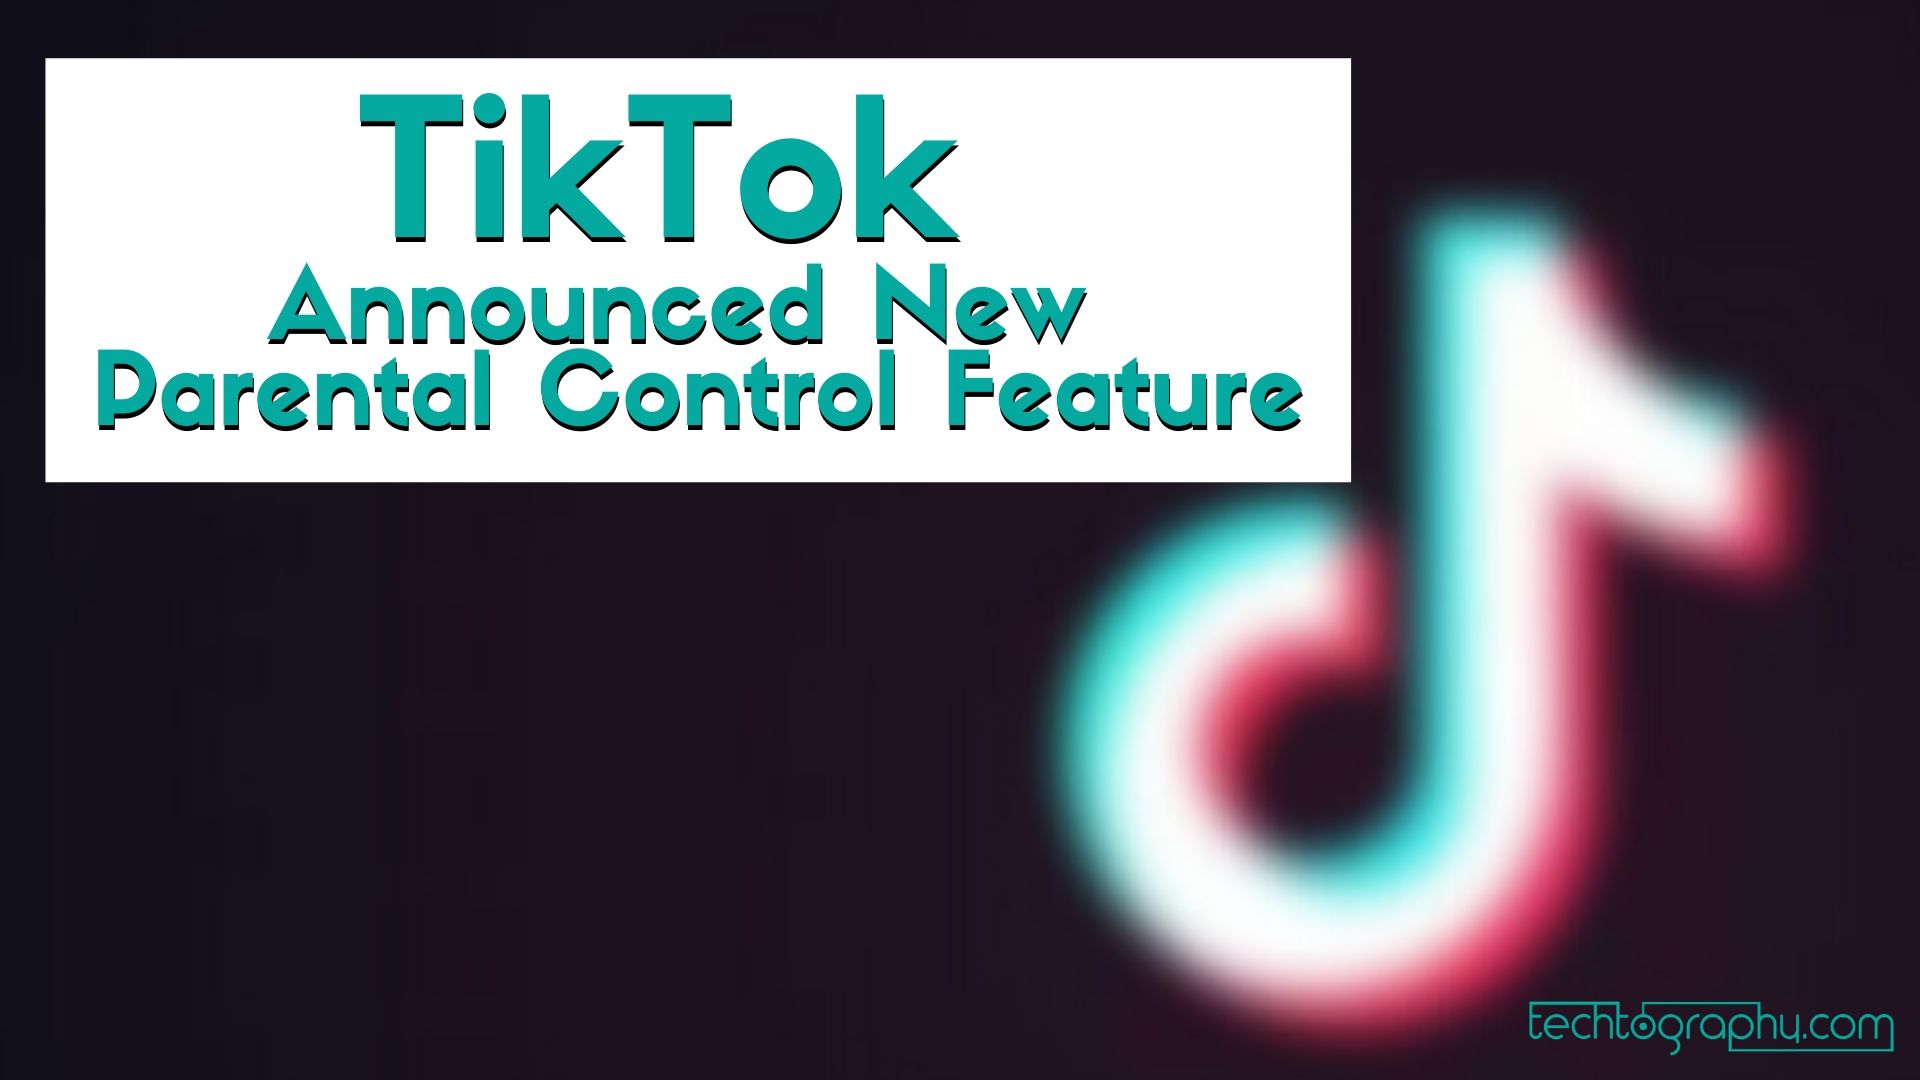 TikTok Announced New Parental Control Feature